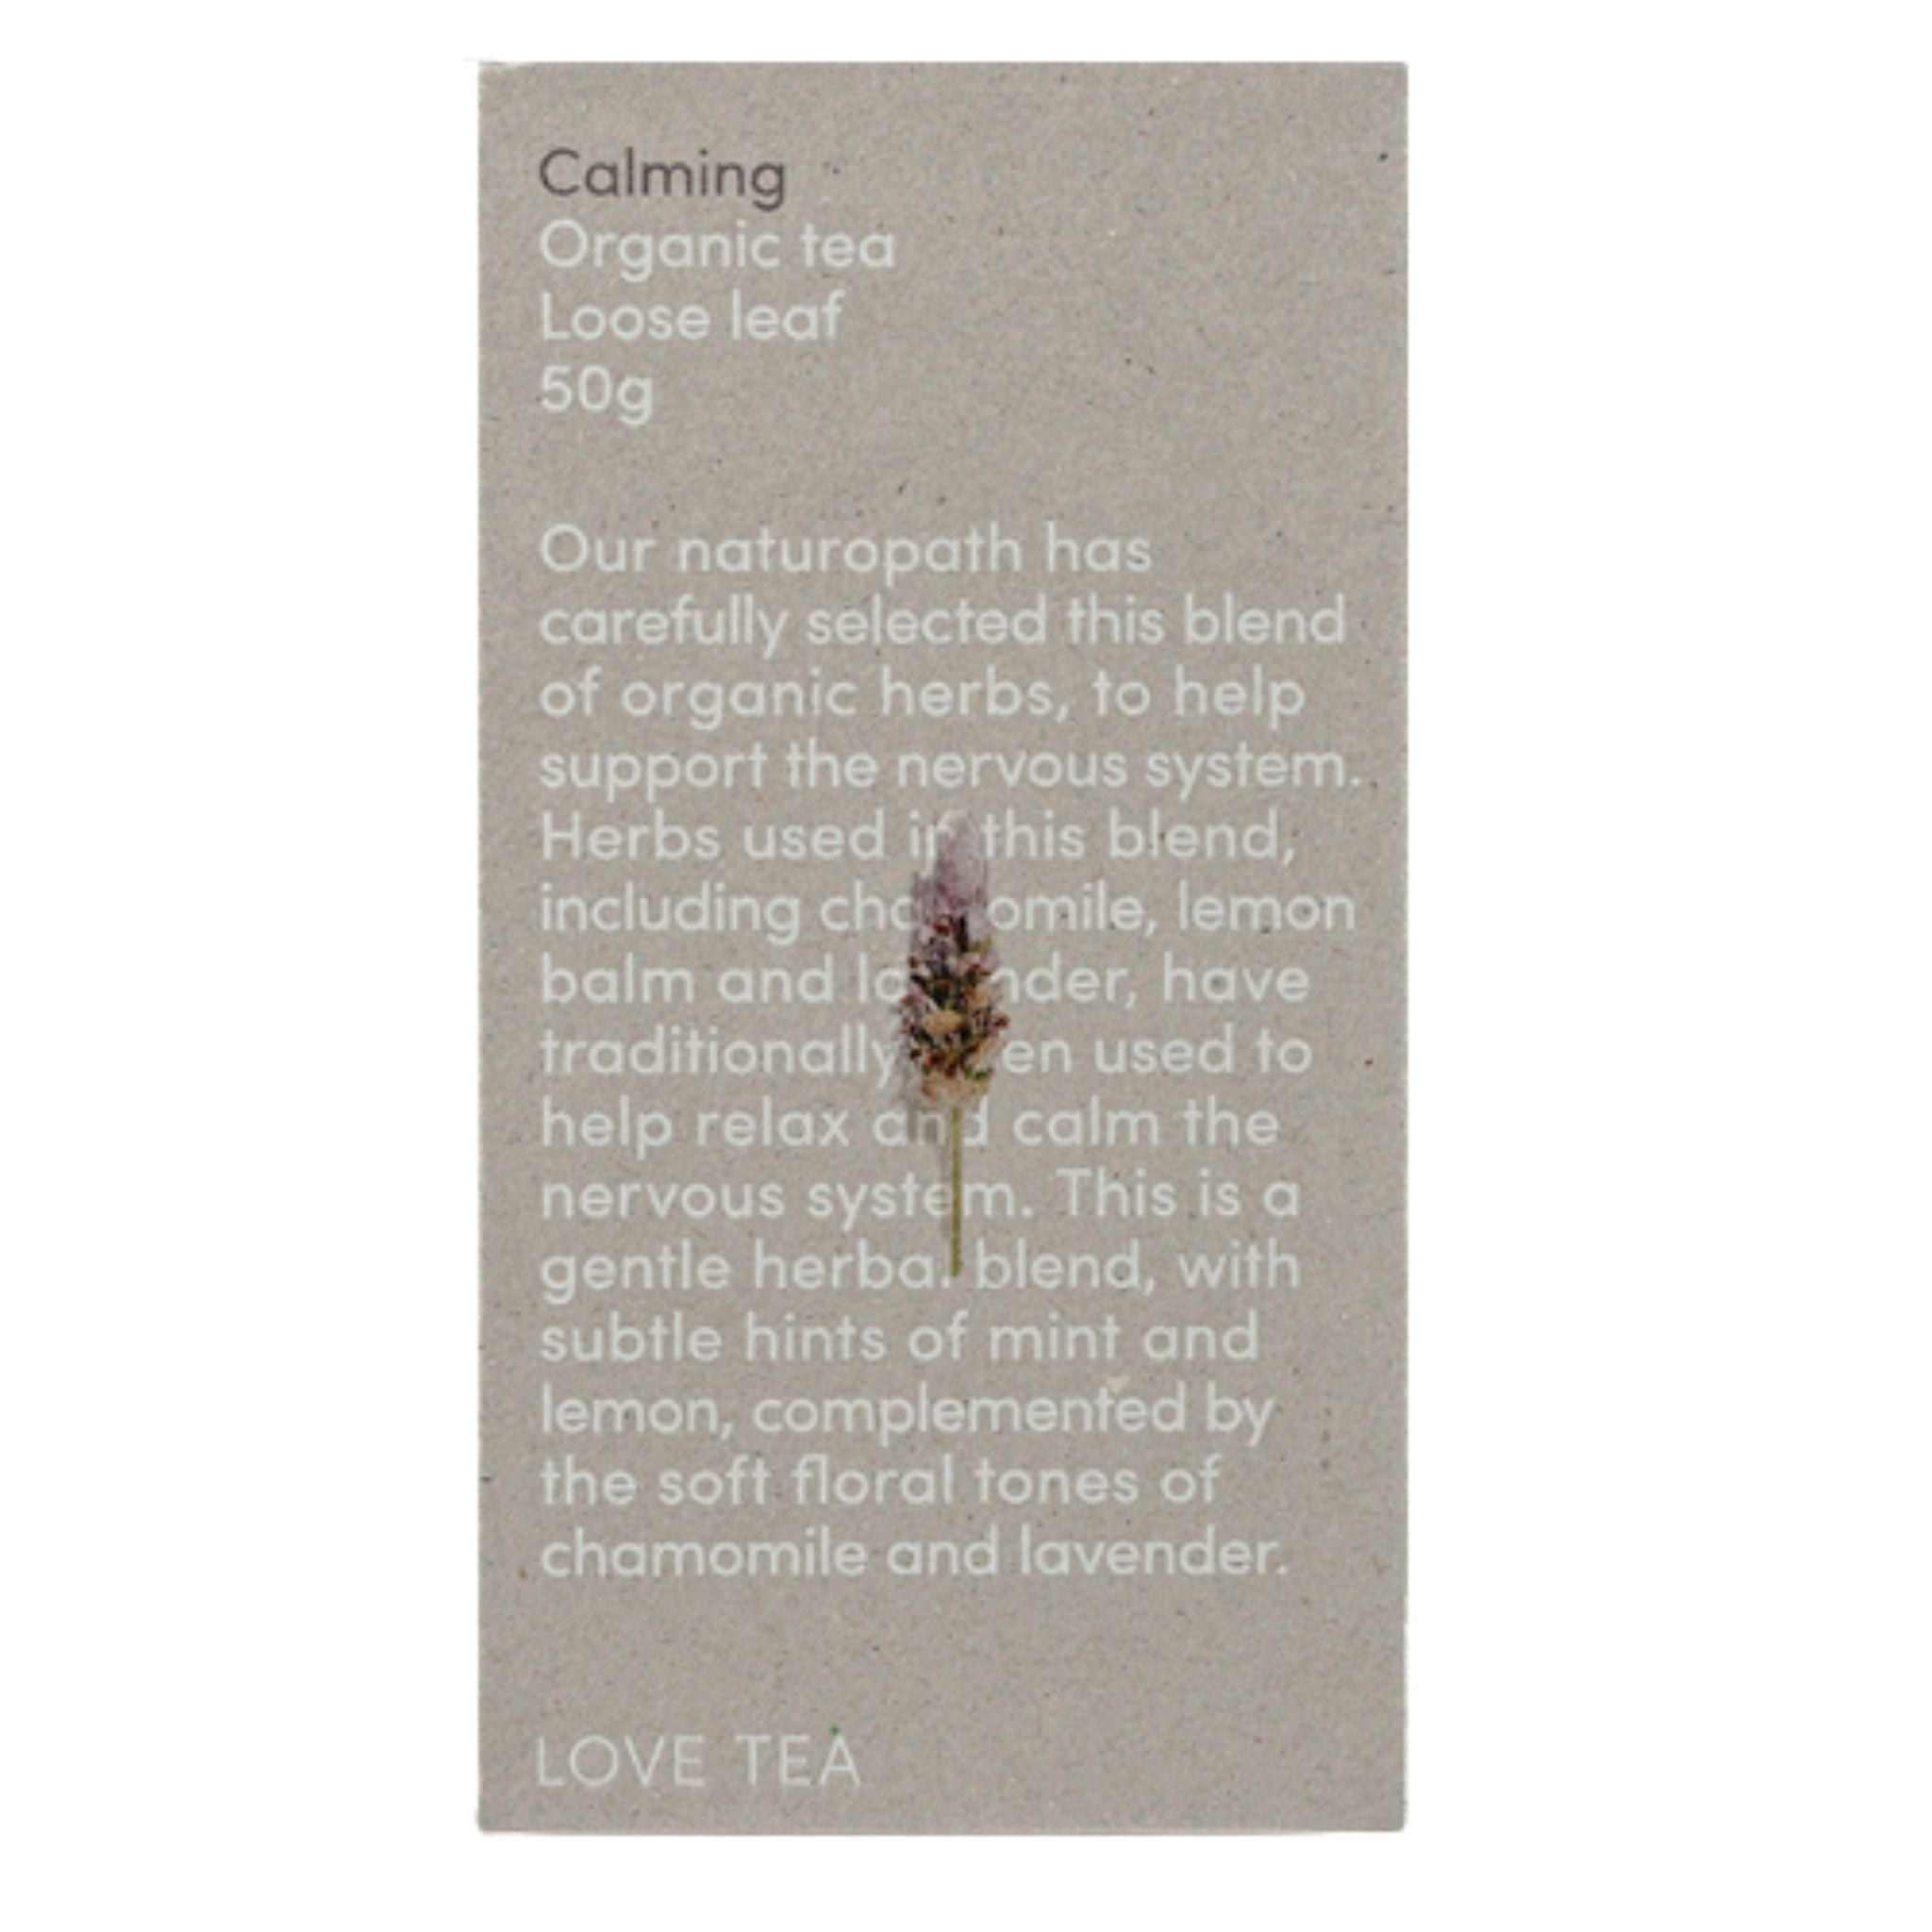 Calming tea - Love Tea